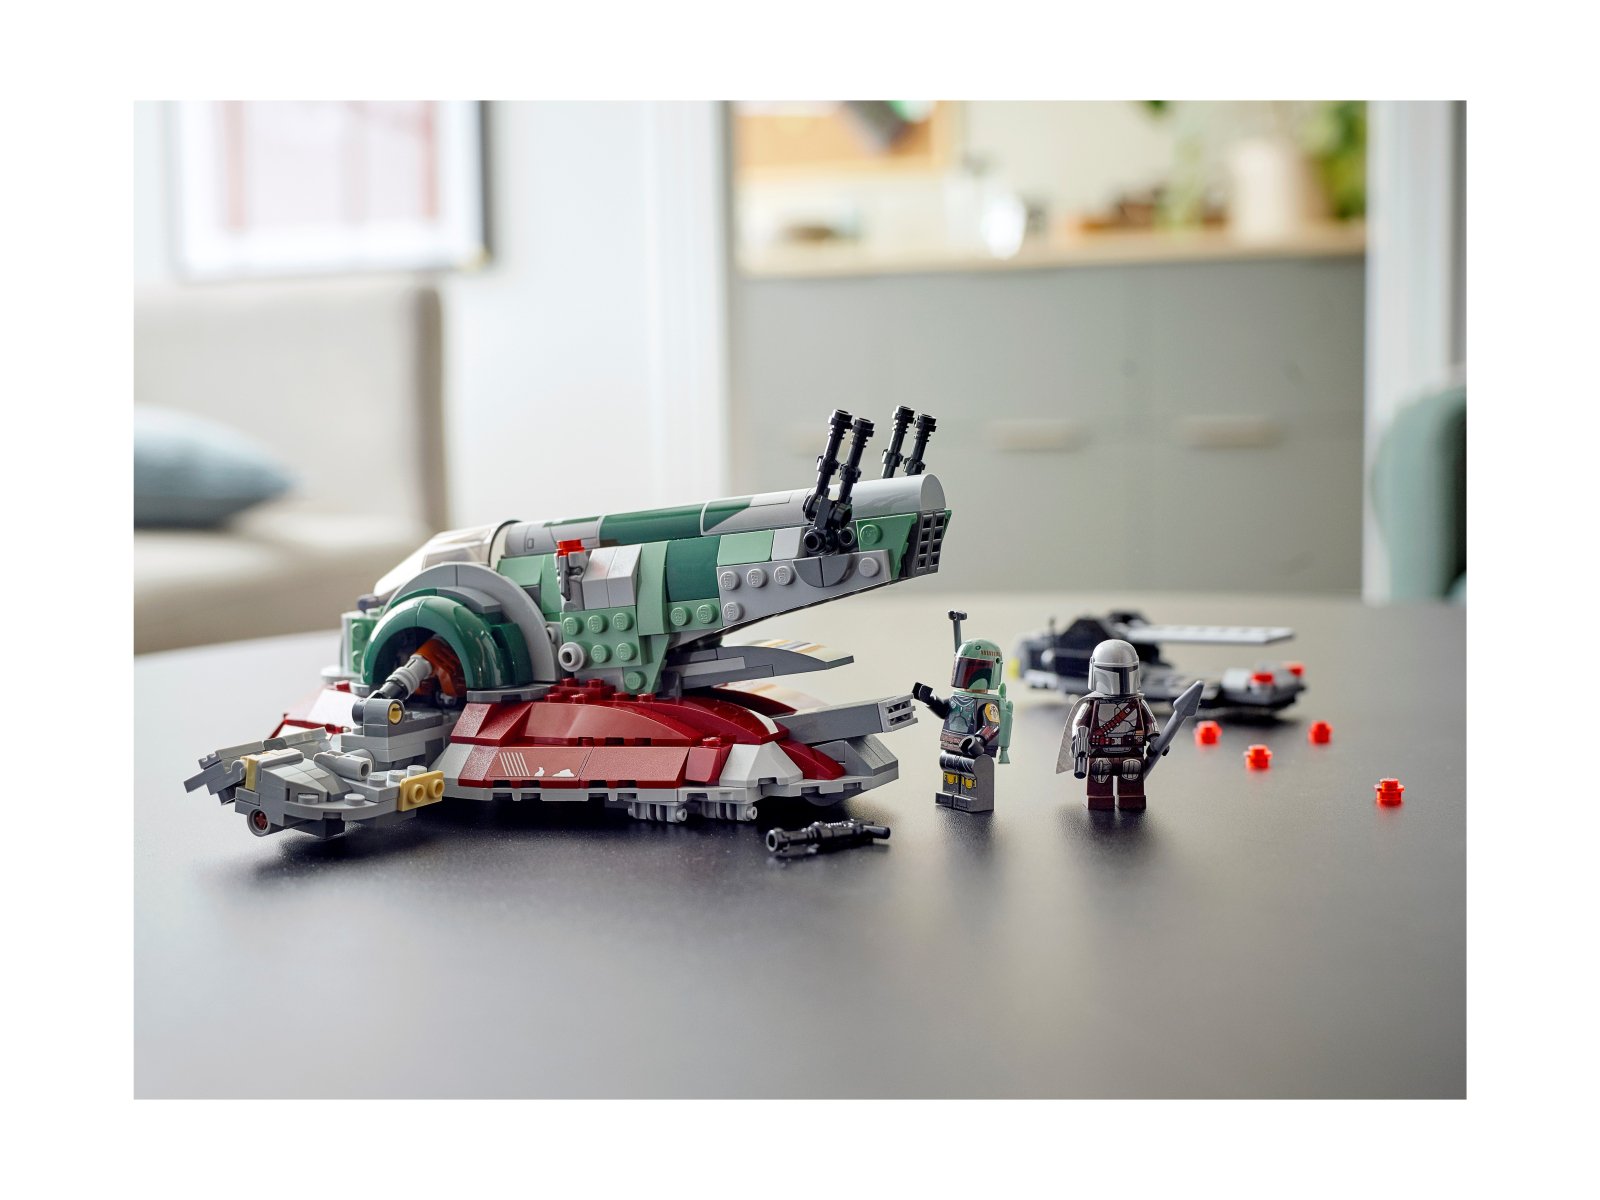 LEGO 75312 Star Wars Statek kosmiczny Boby Fetta™